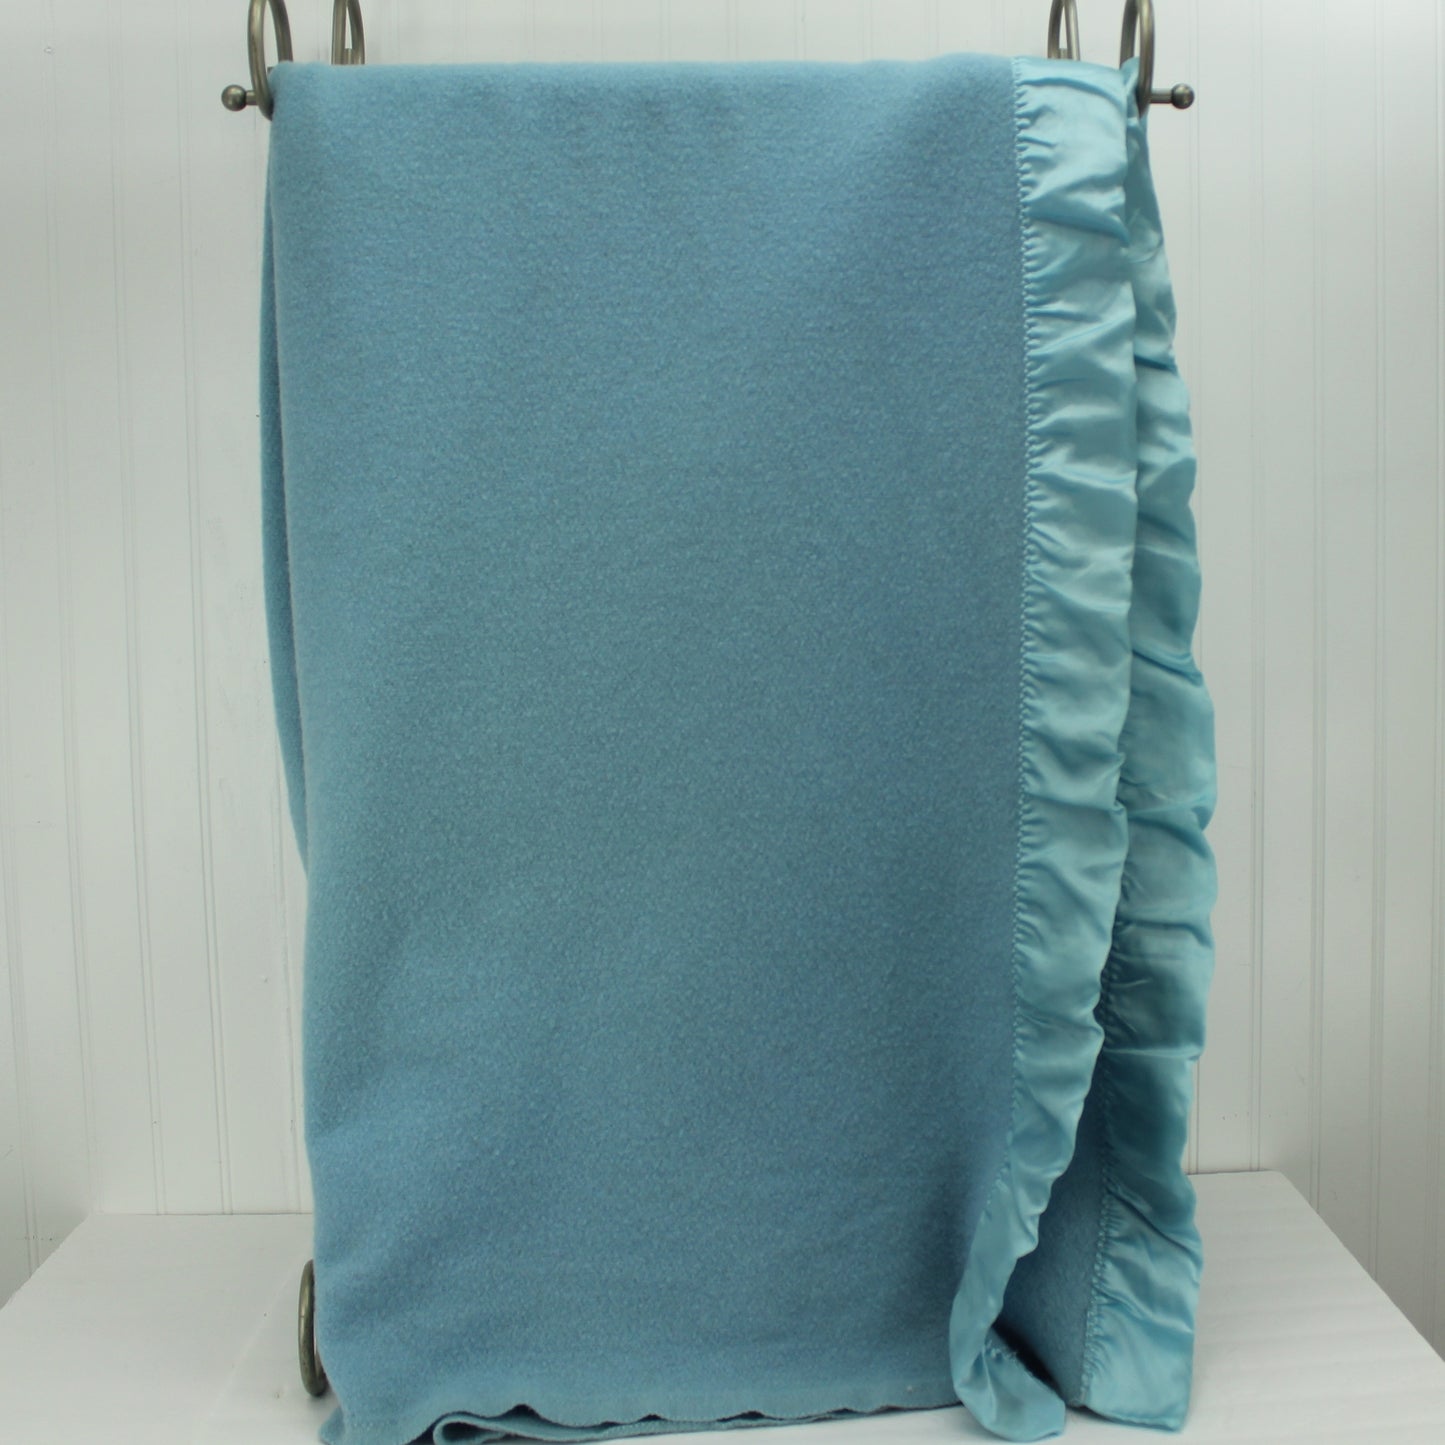 Copy of Faribo Wool Sky Blue Blanket Satin Binding 80" X 82" folded view of blanket